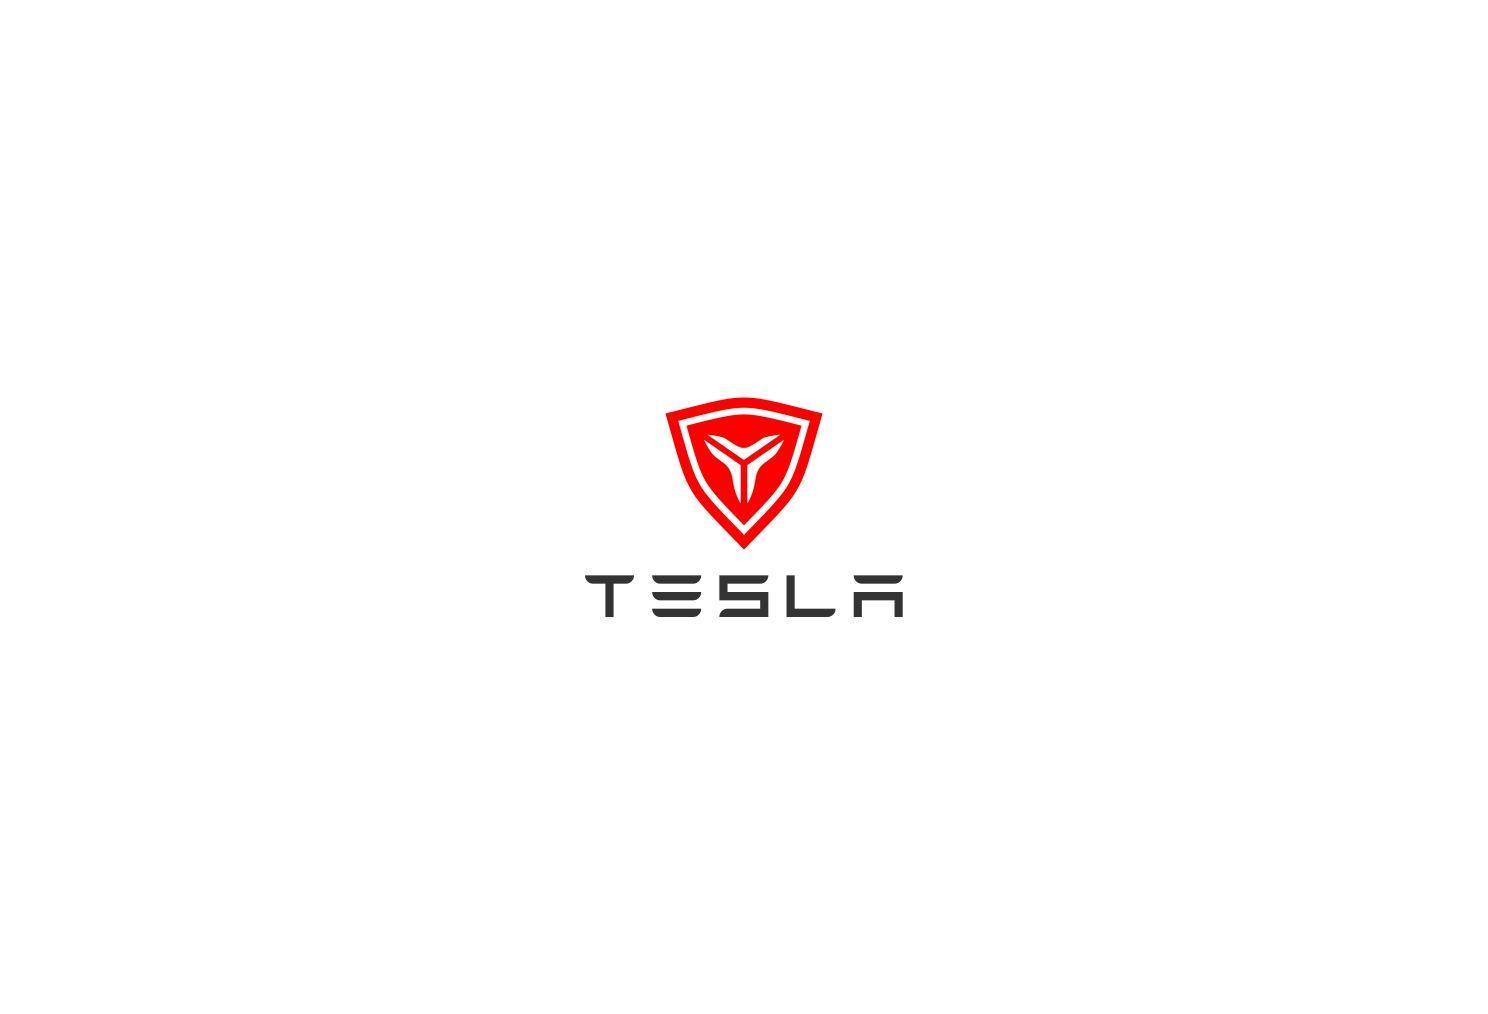 Tesla Business Logo - Modern, Professional, Business Logo Design for Tesla by noeazhuri ...